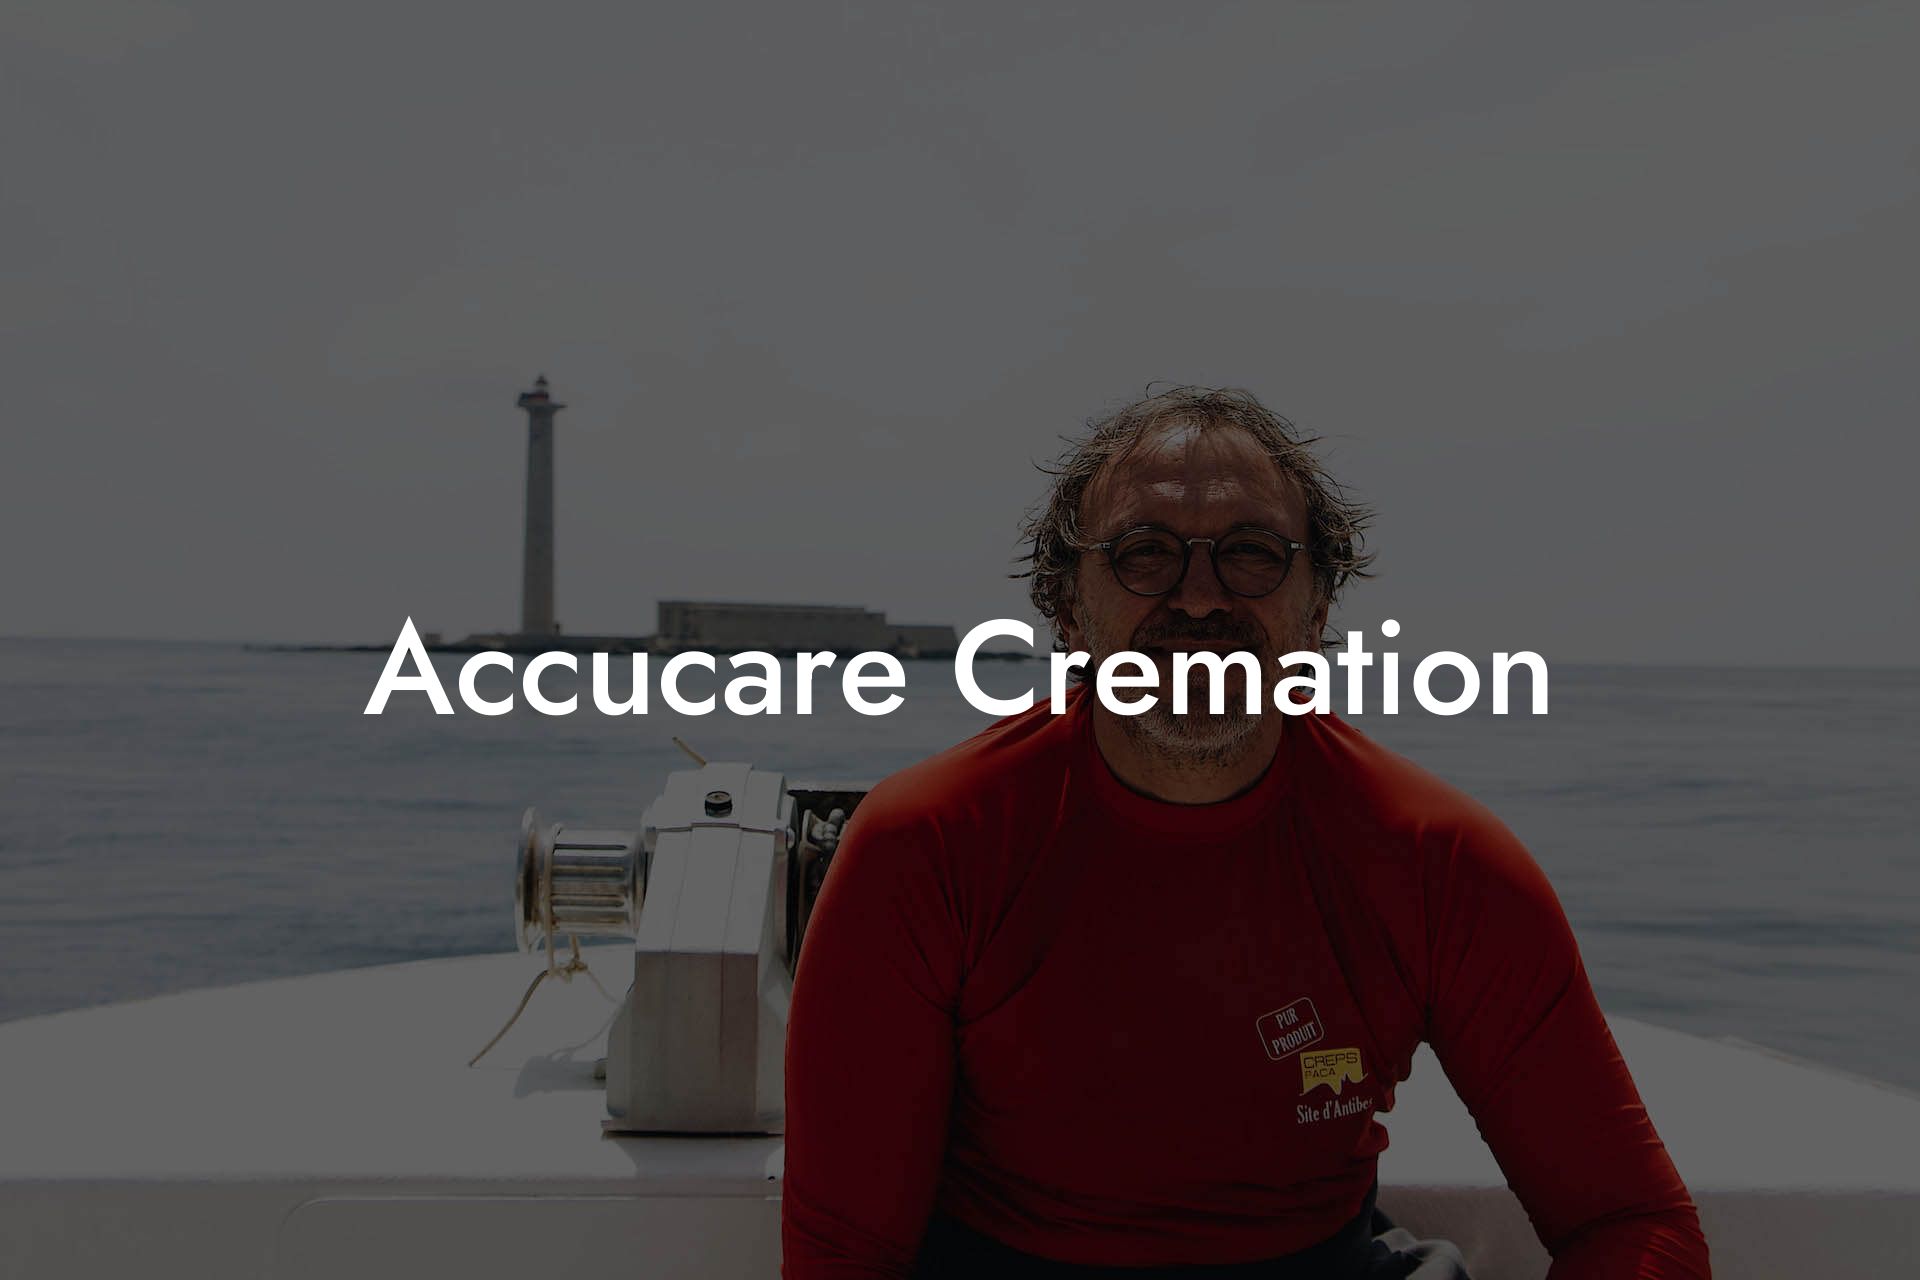 Accucare Cremation